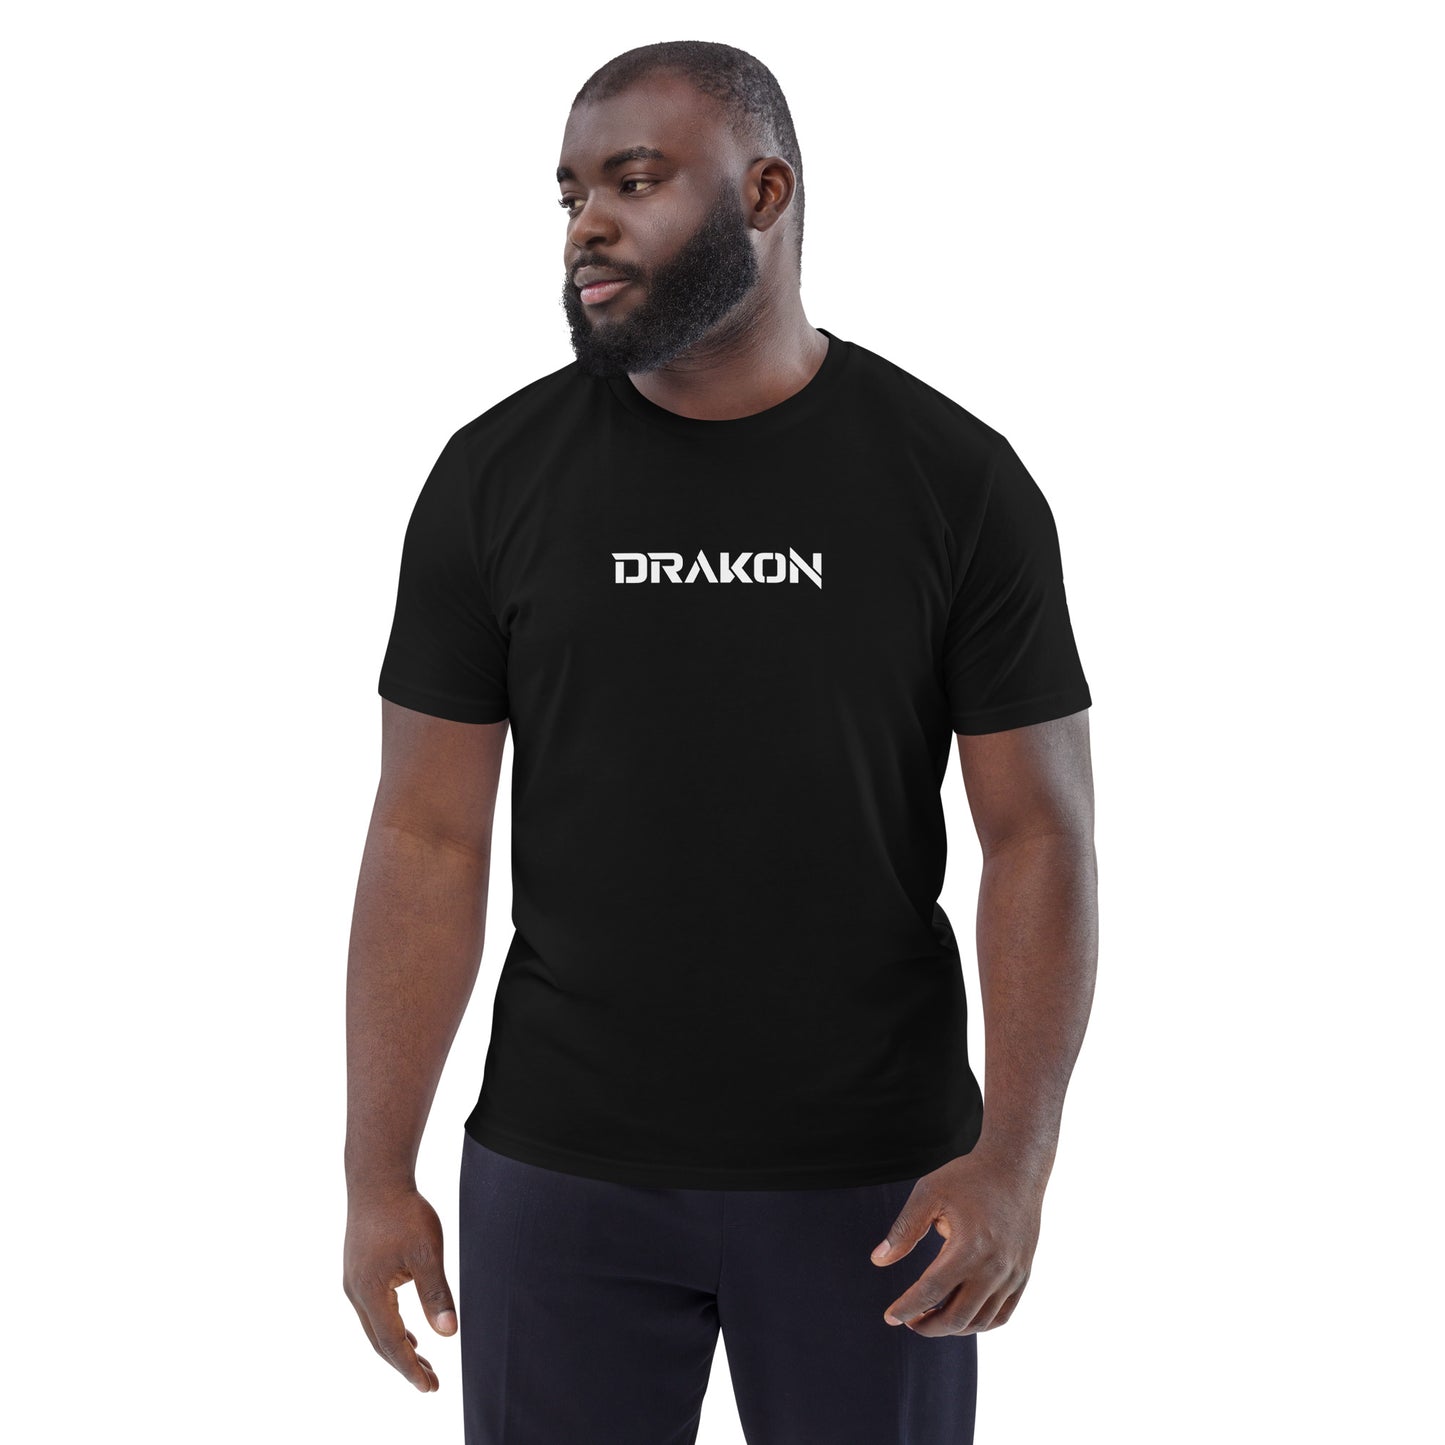 Aquarius - Drakon Short Sleeve T-Shirt